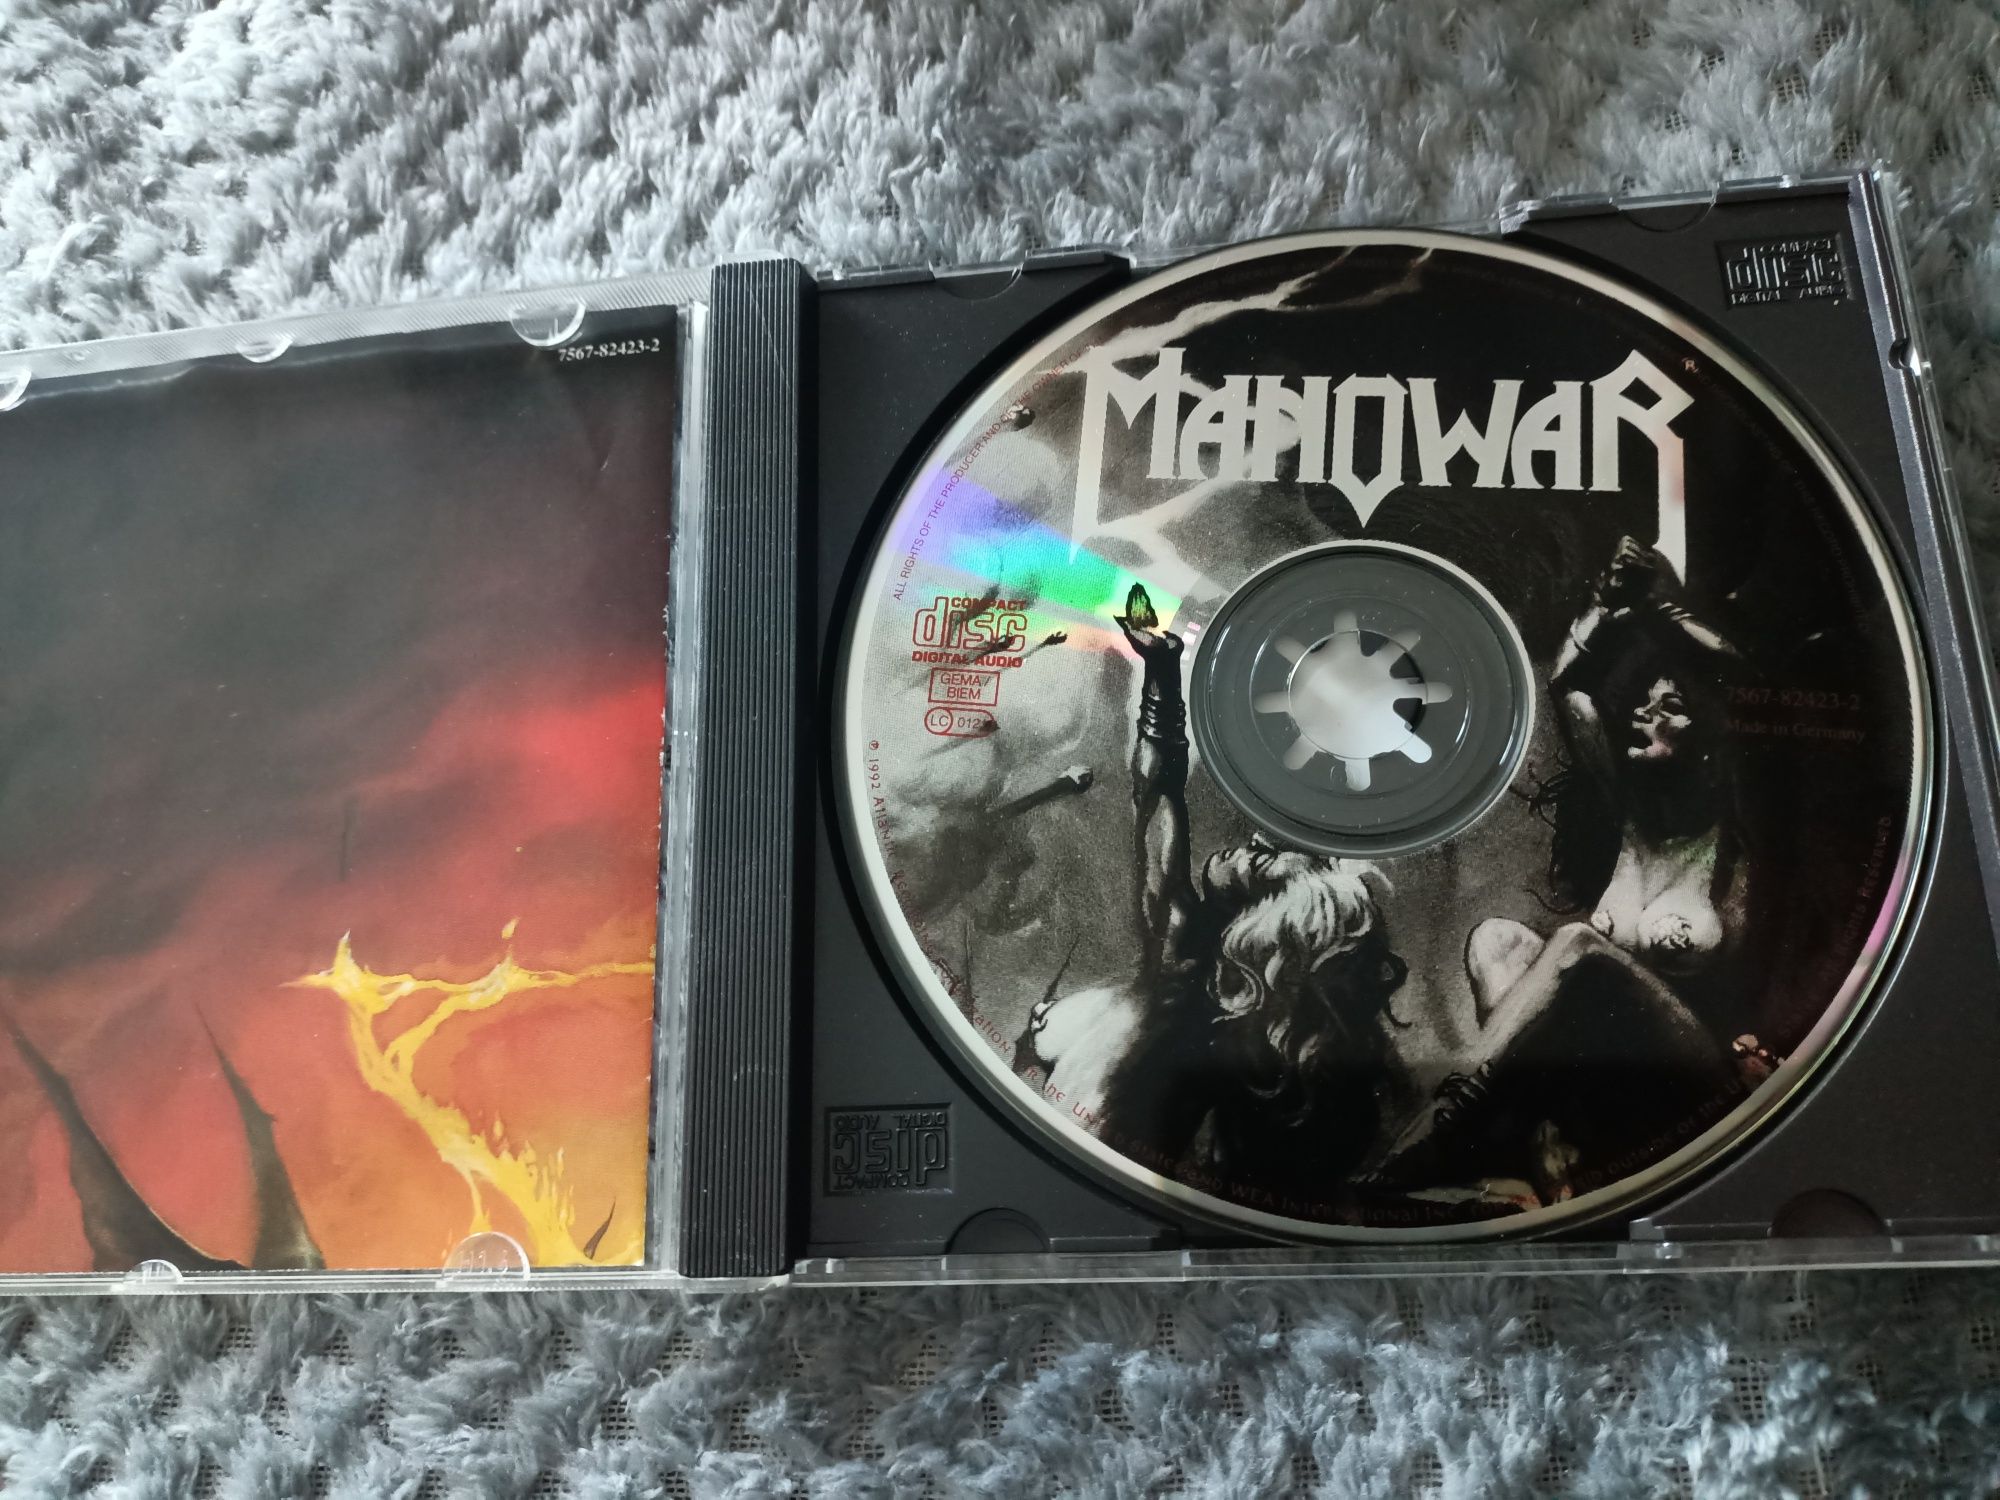 Manowar - The Triumph Of Steel (vg+)